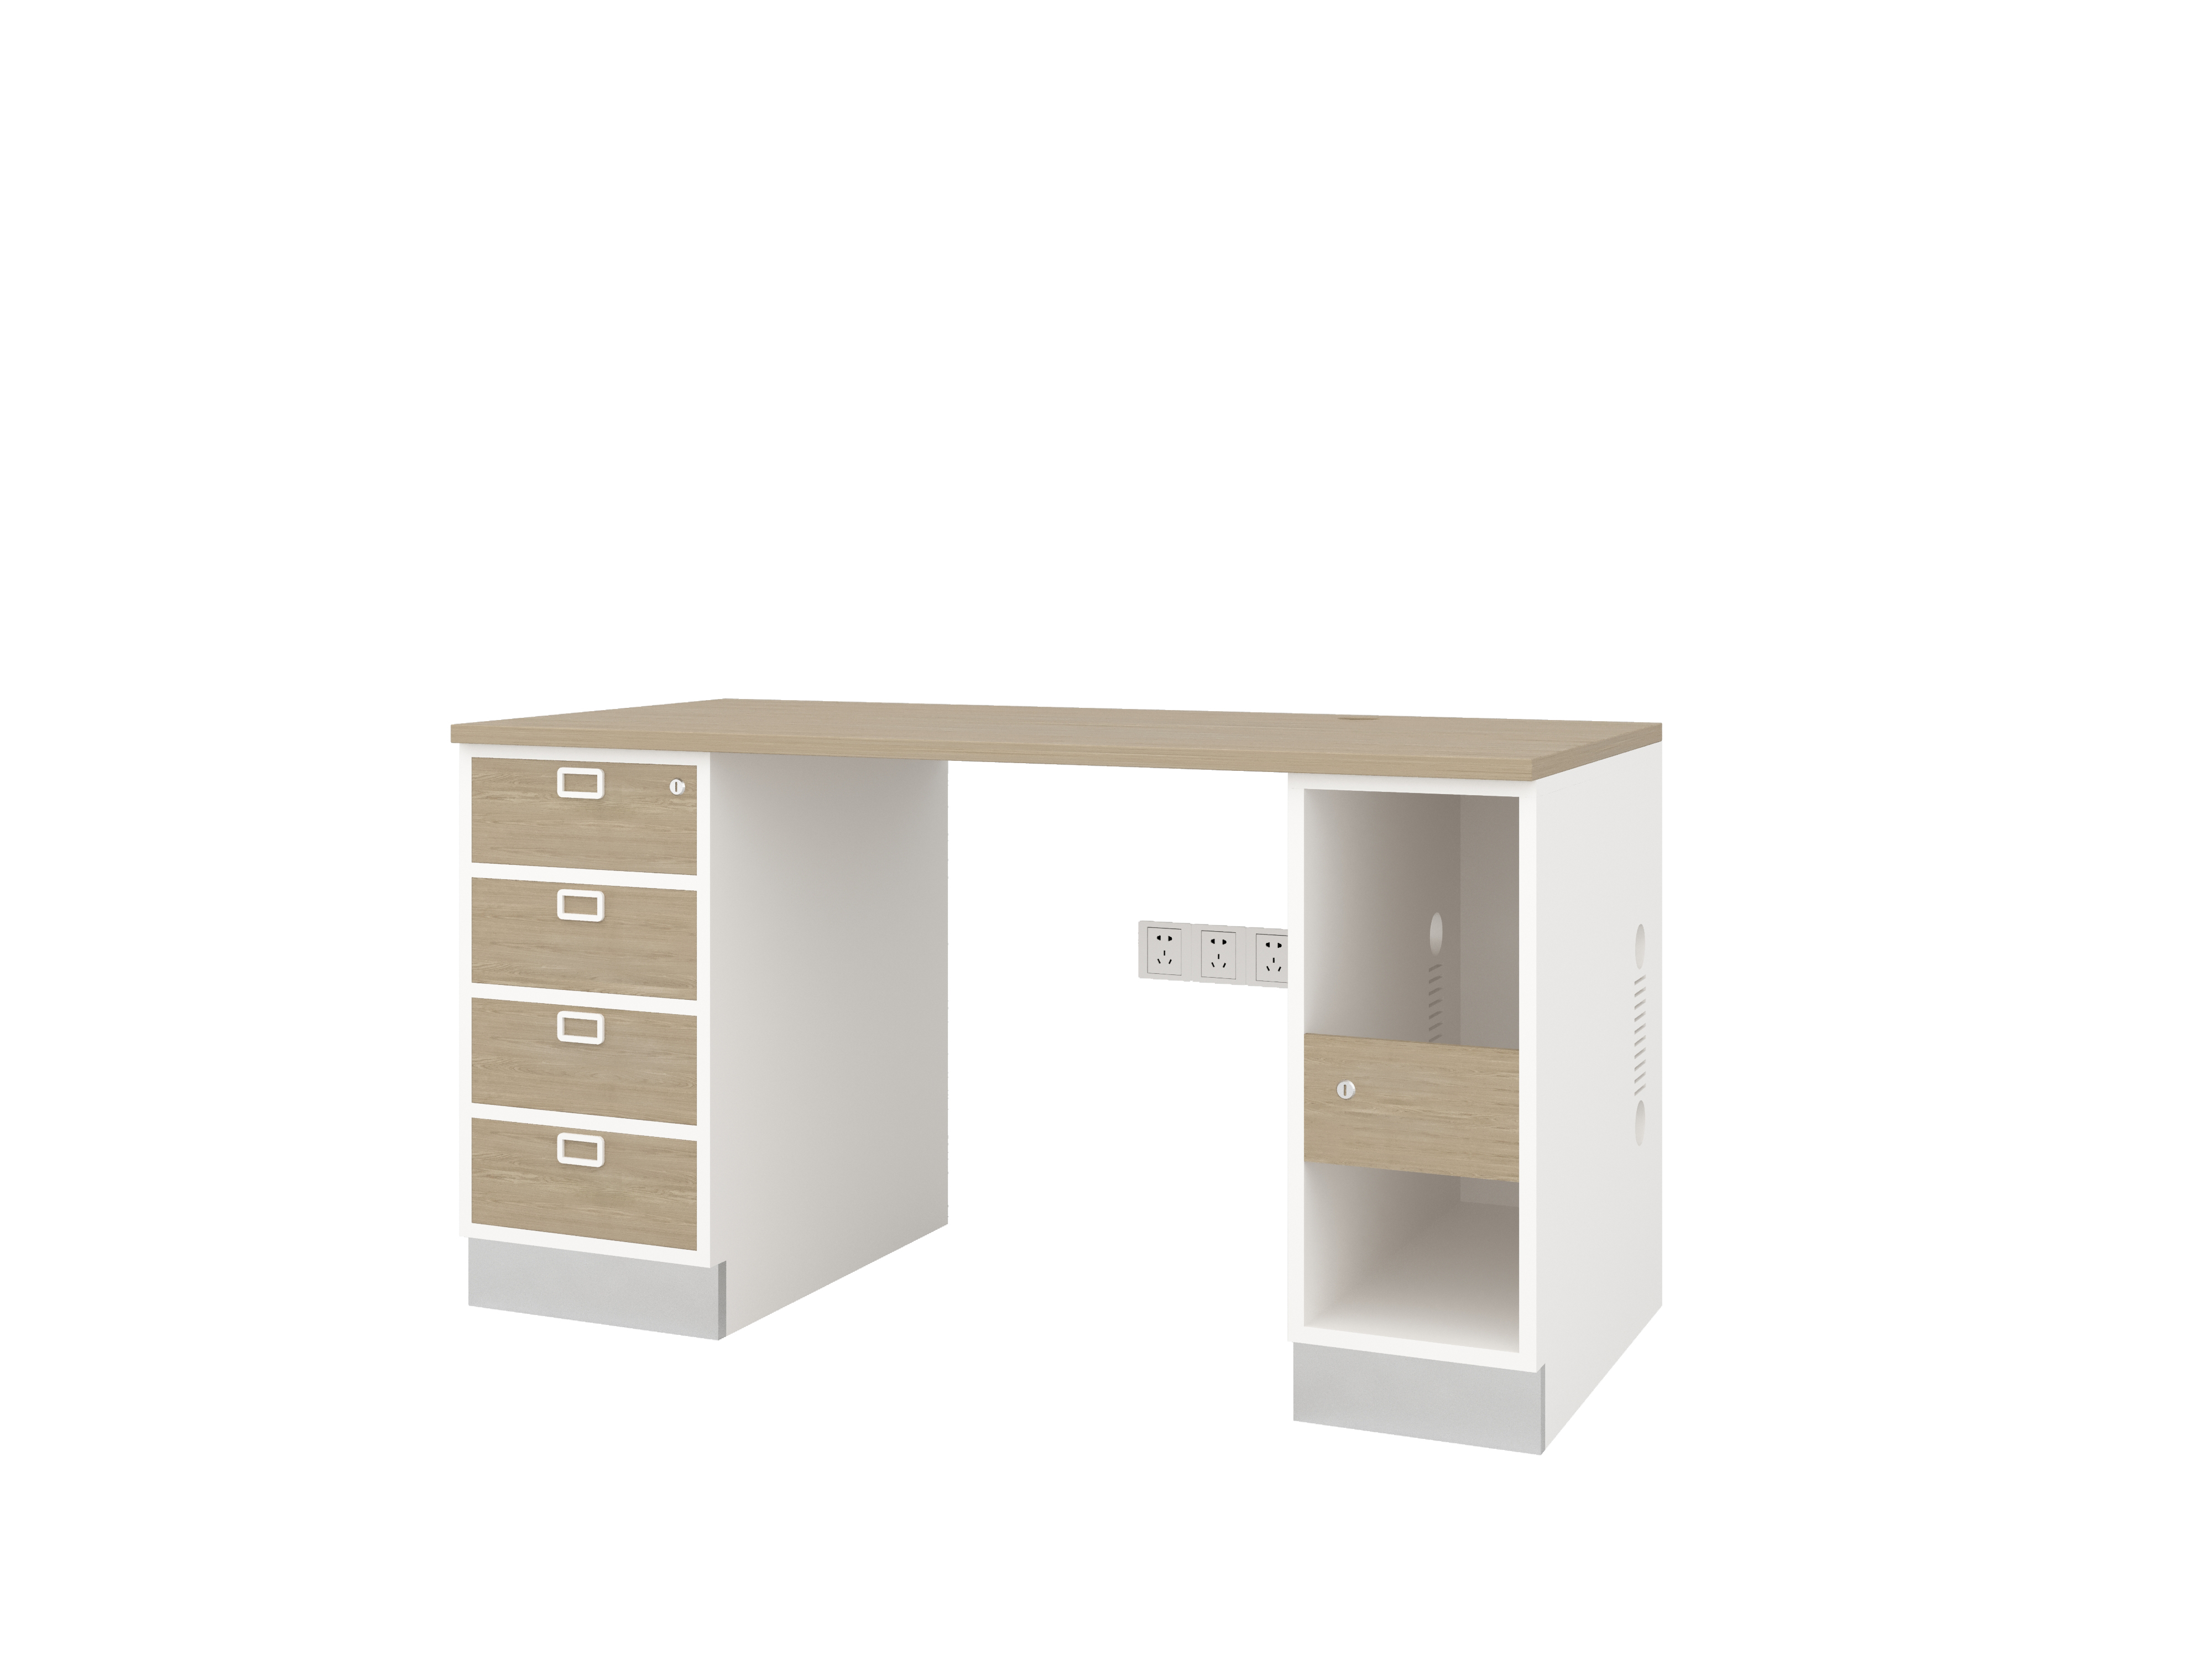 Set of 4 drawer Desk with Storage Cabinet